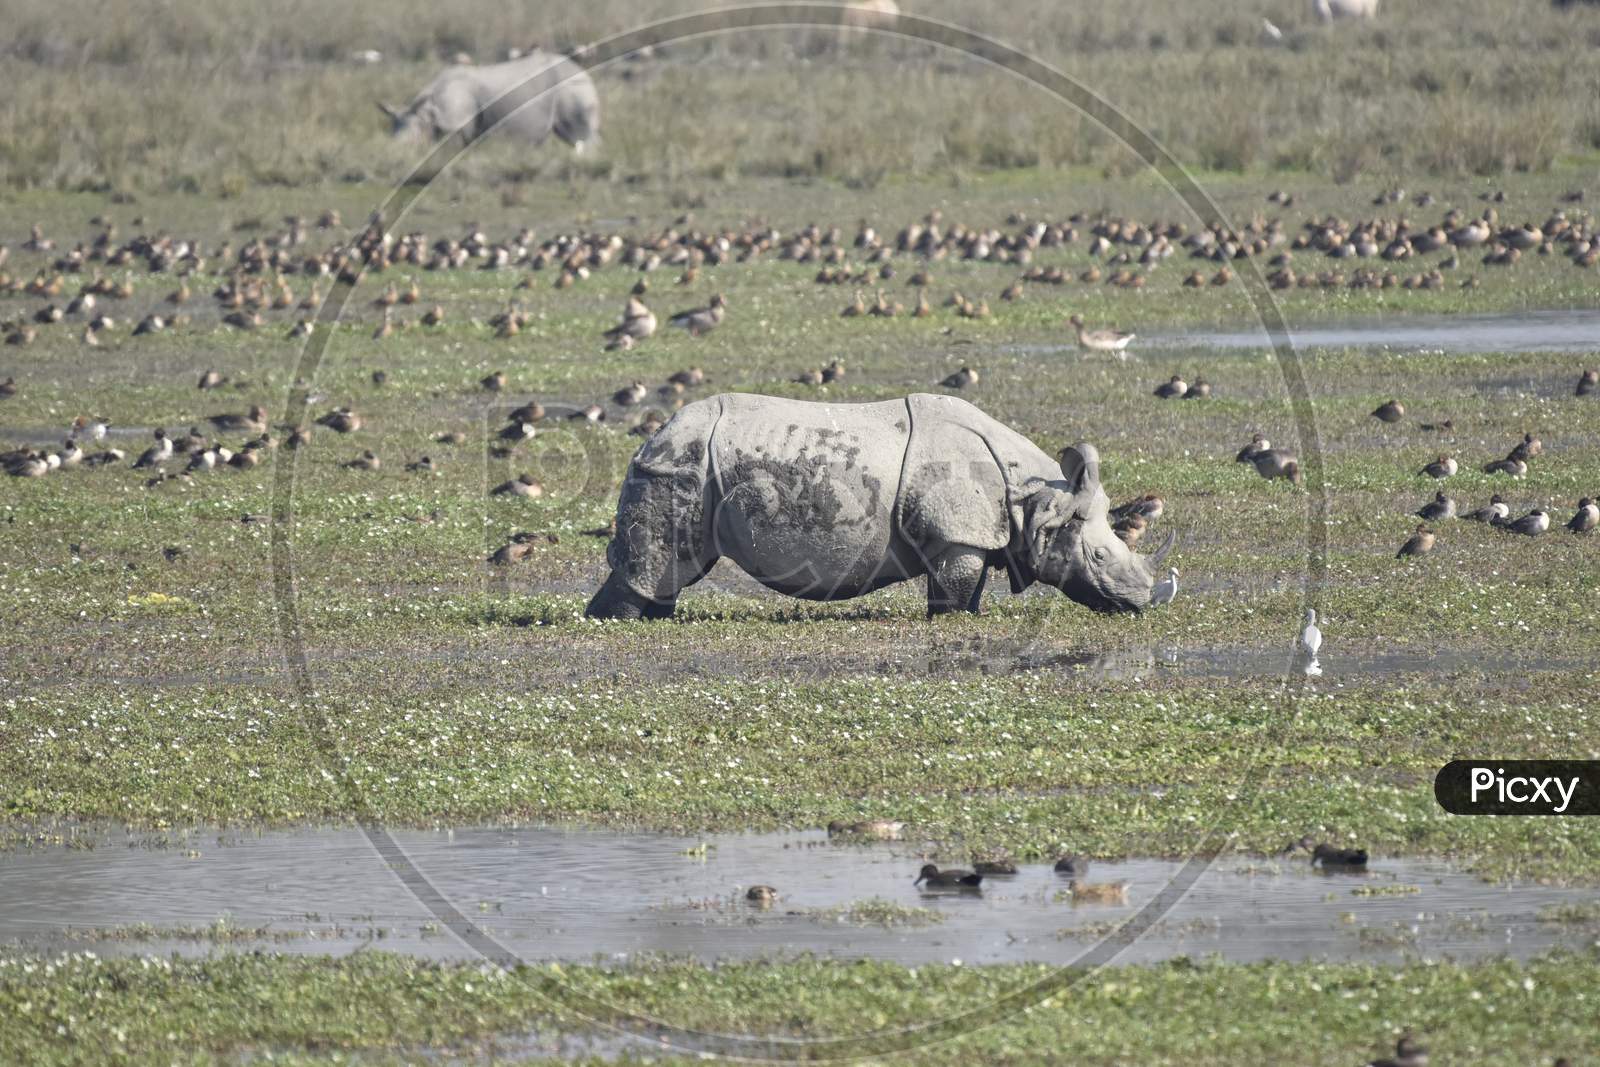 Horned Rhinoceros  In Pobitora Wild Life Sanctuary in Assam